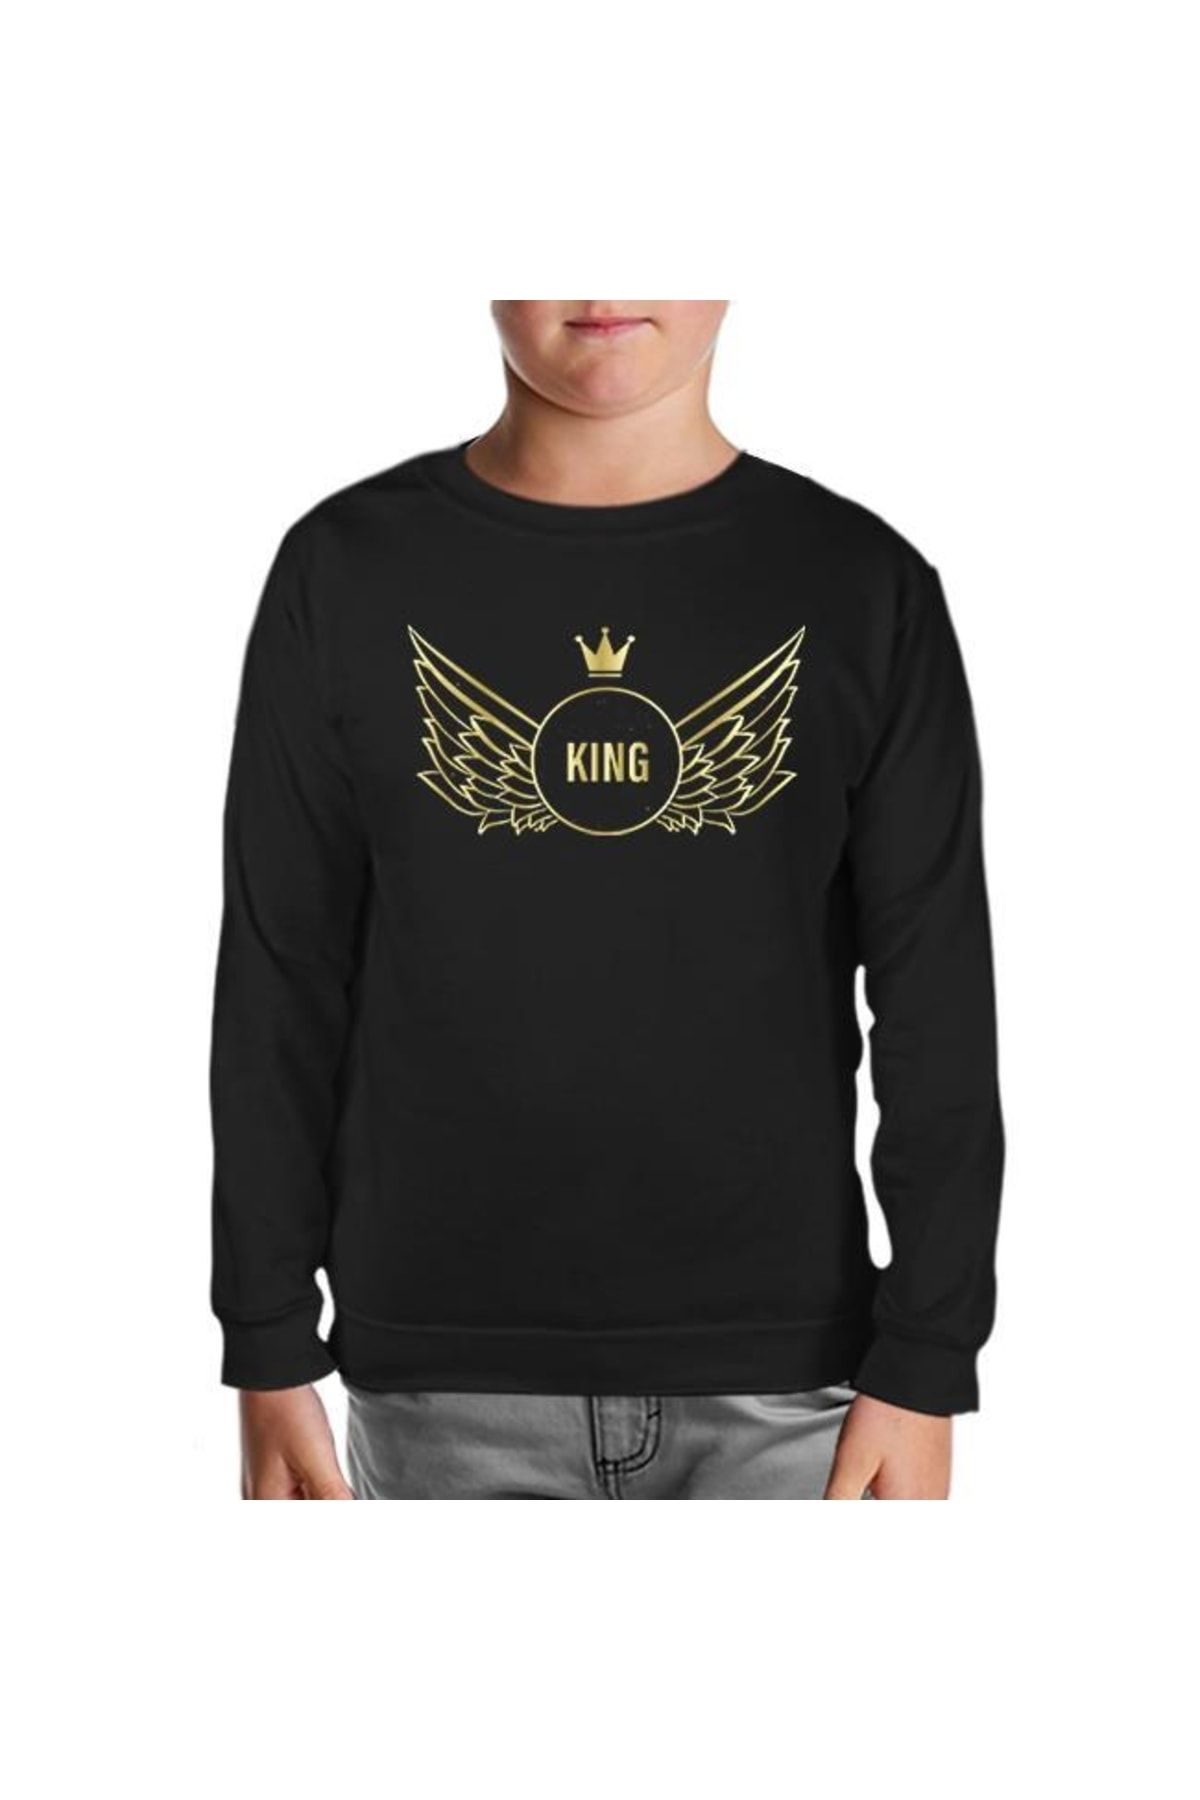 Lord T-Shirt King Writing With A Crown And Wings Siyah Çocuk Sweatshirt